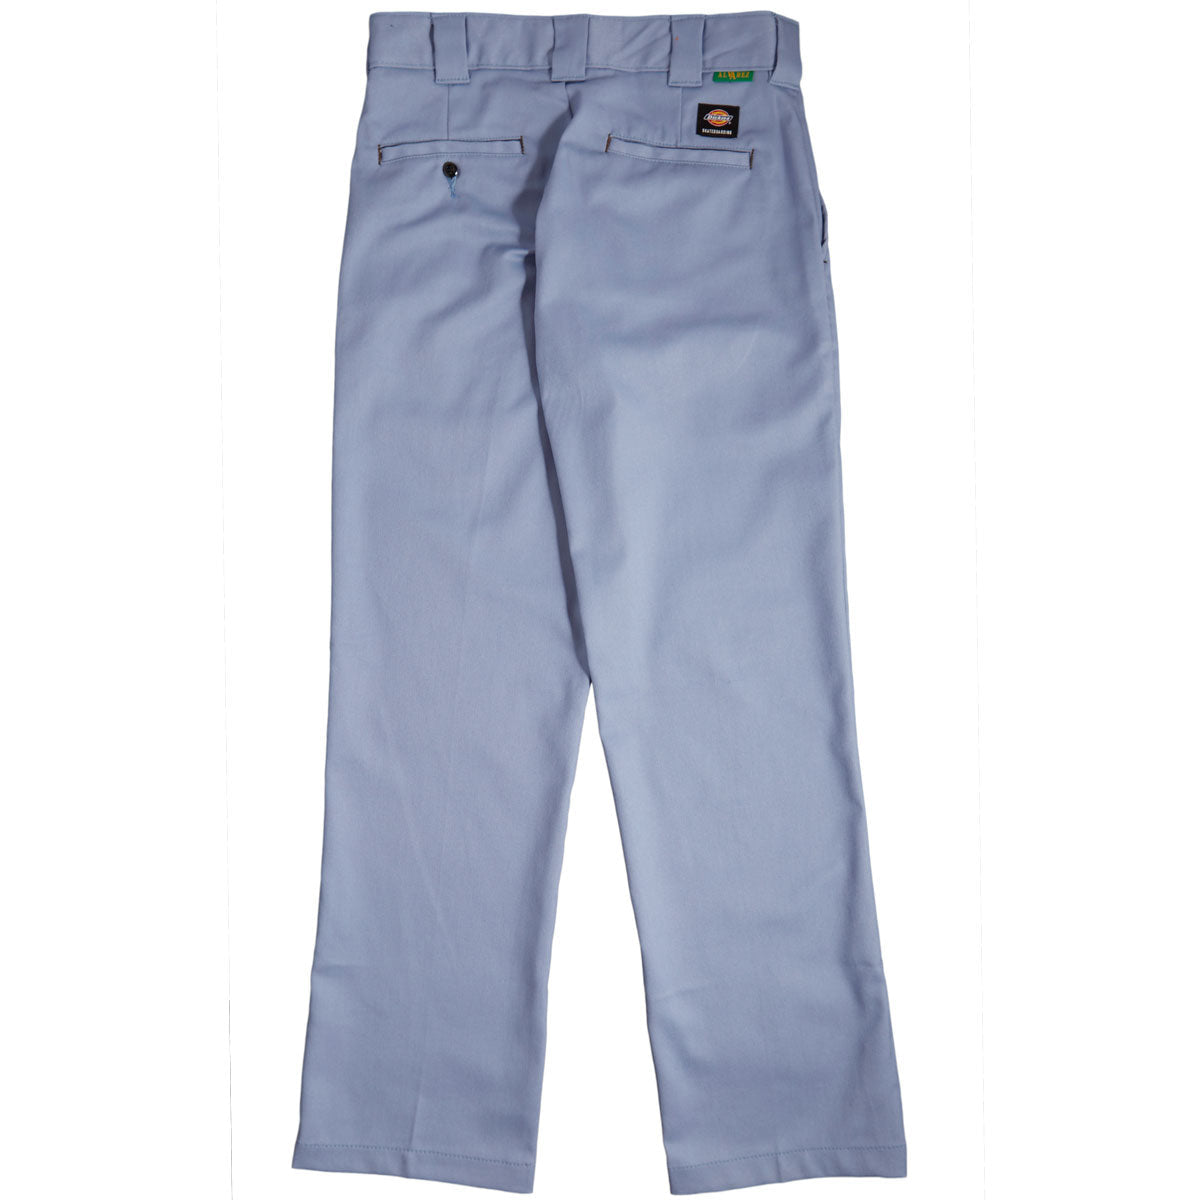 Dickies Vincent Alvarez Balam Regular Fit Pants - Gulf Blue image 4